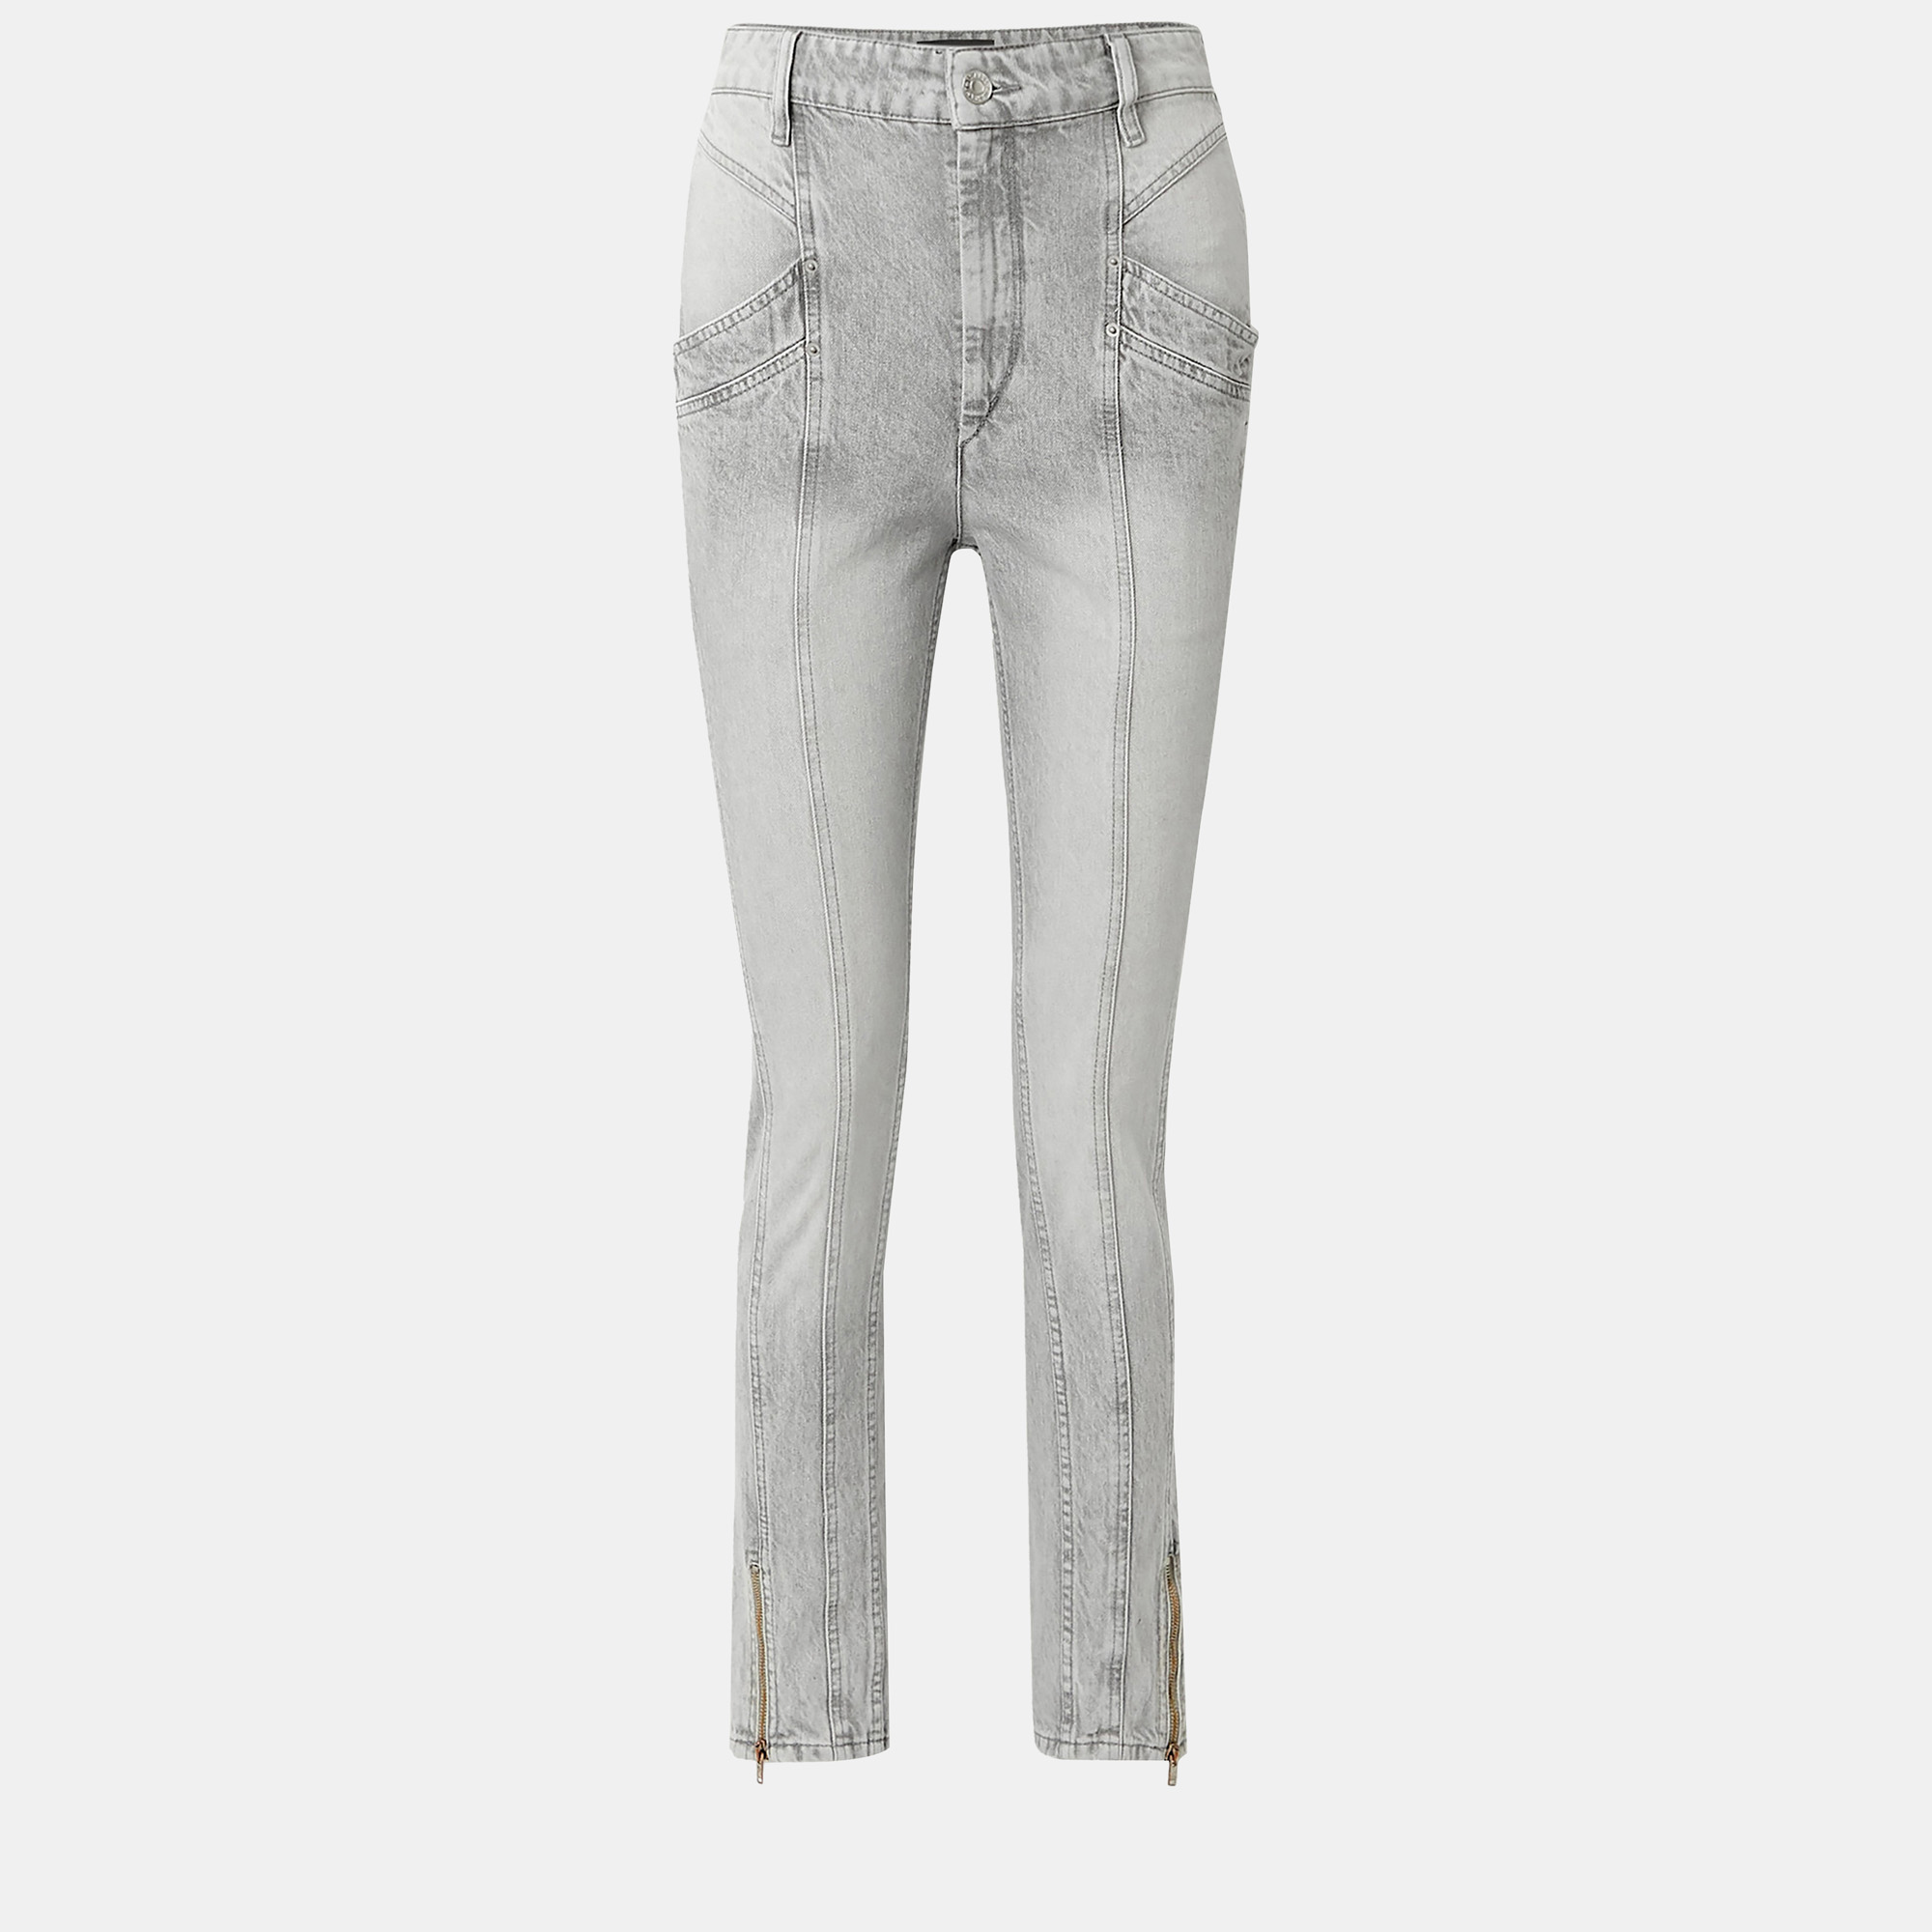 Isabel marant cotton skinny leg jeans 40